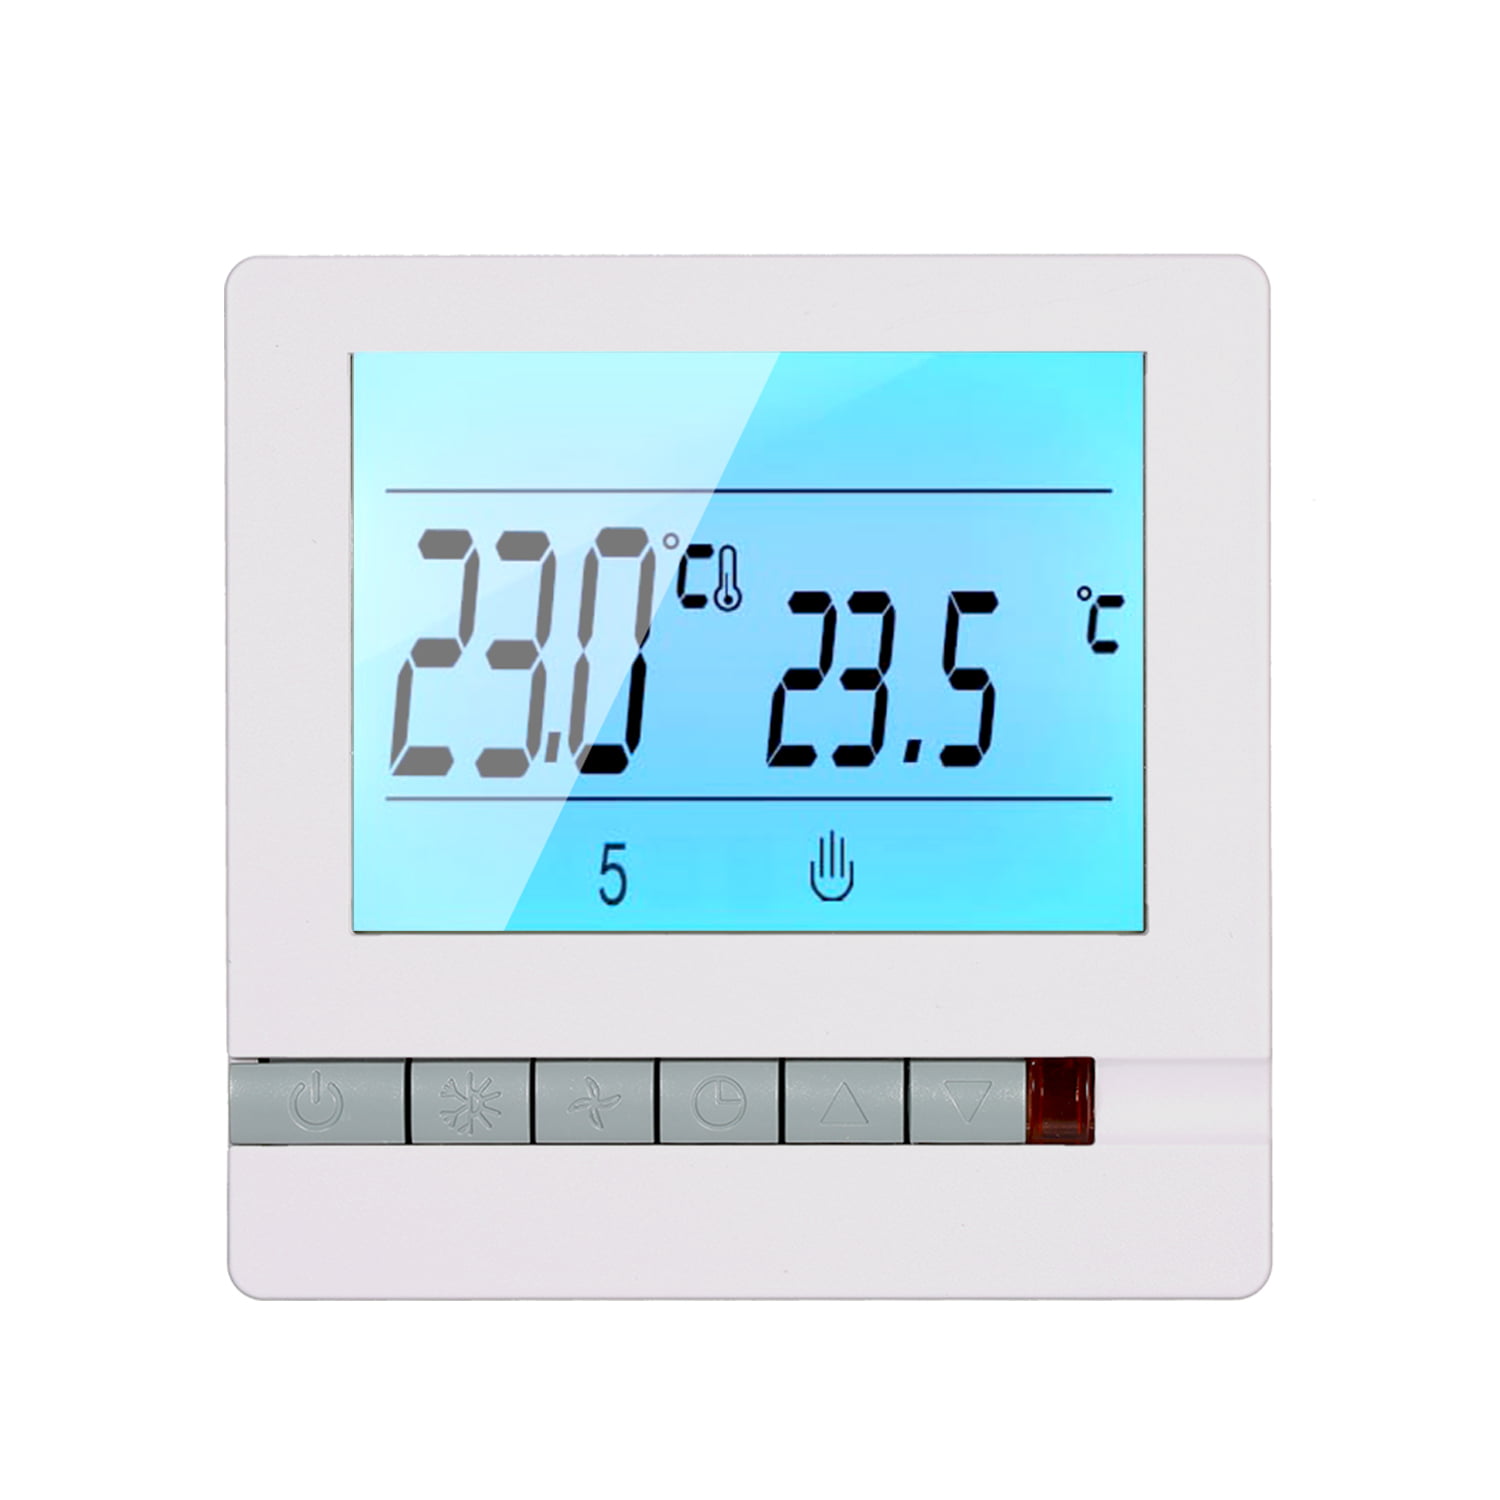 Lcd Digital Display Programming Heating Thermostat Temperature